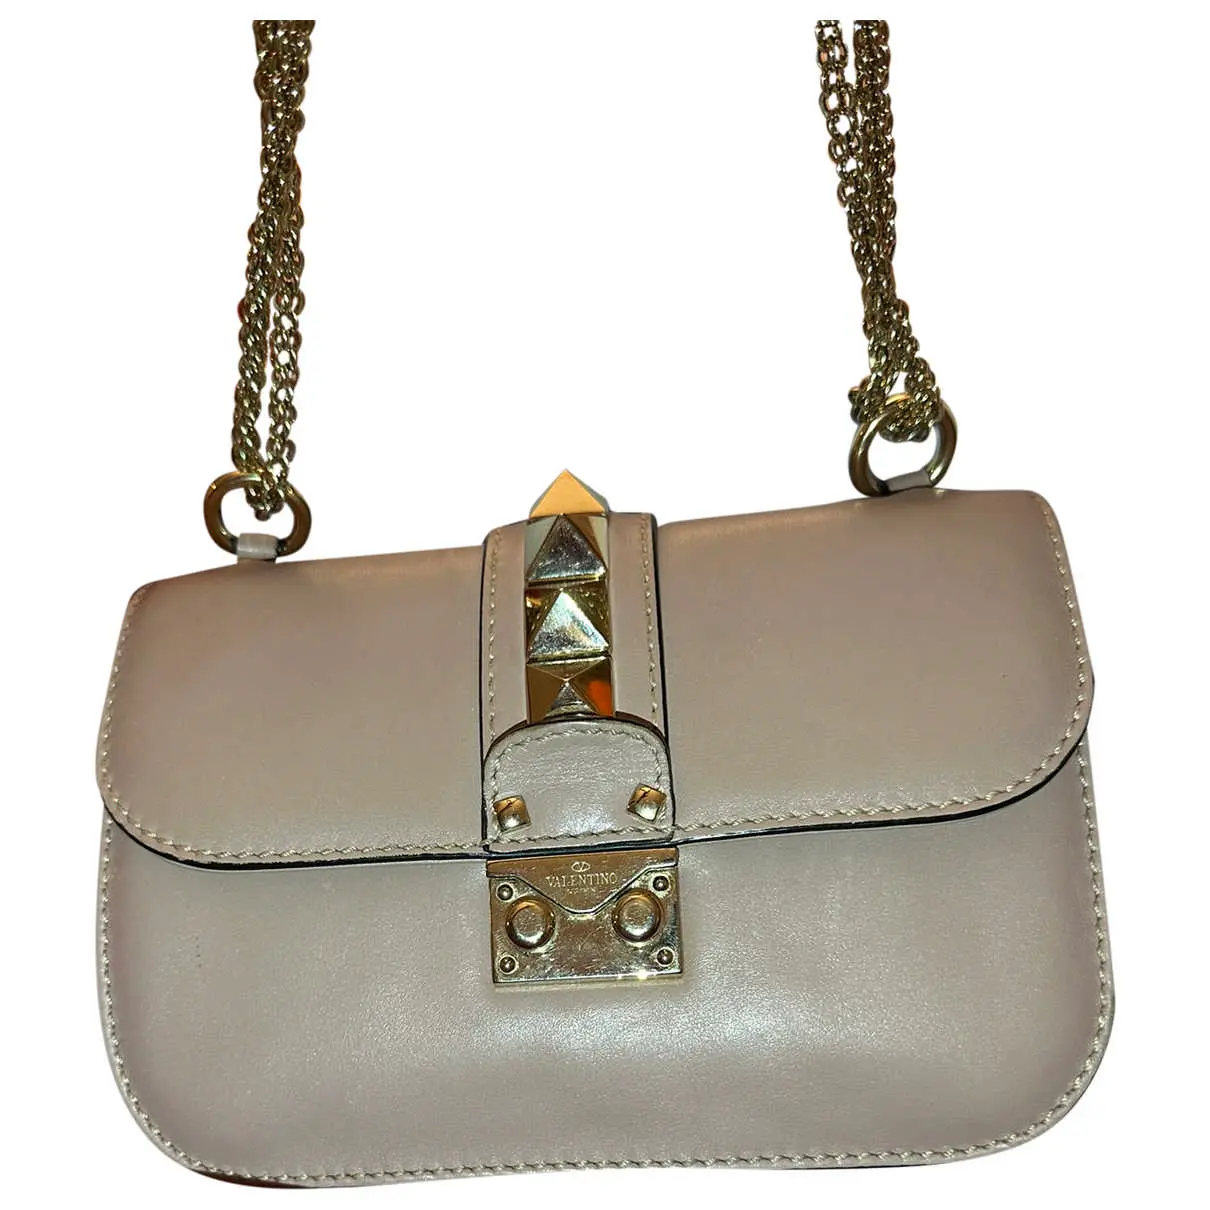 Glam Lock leather crossbody bag